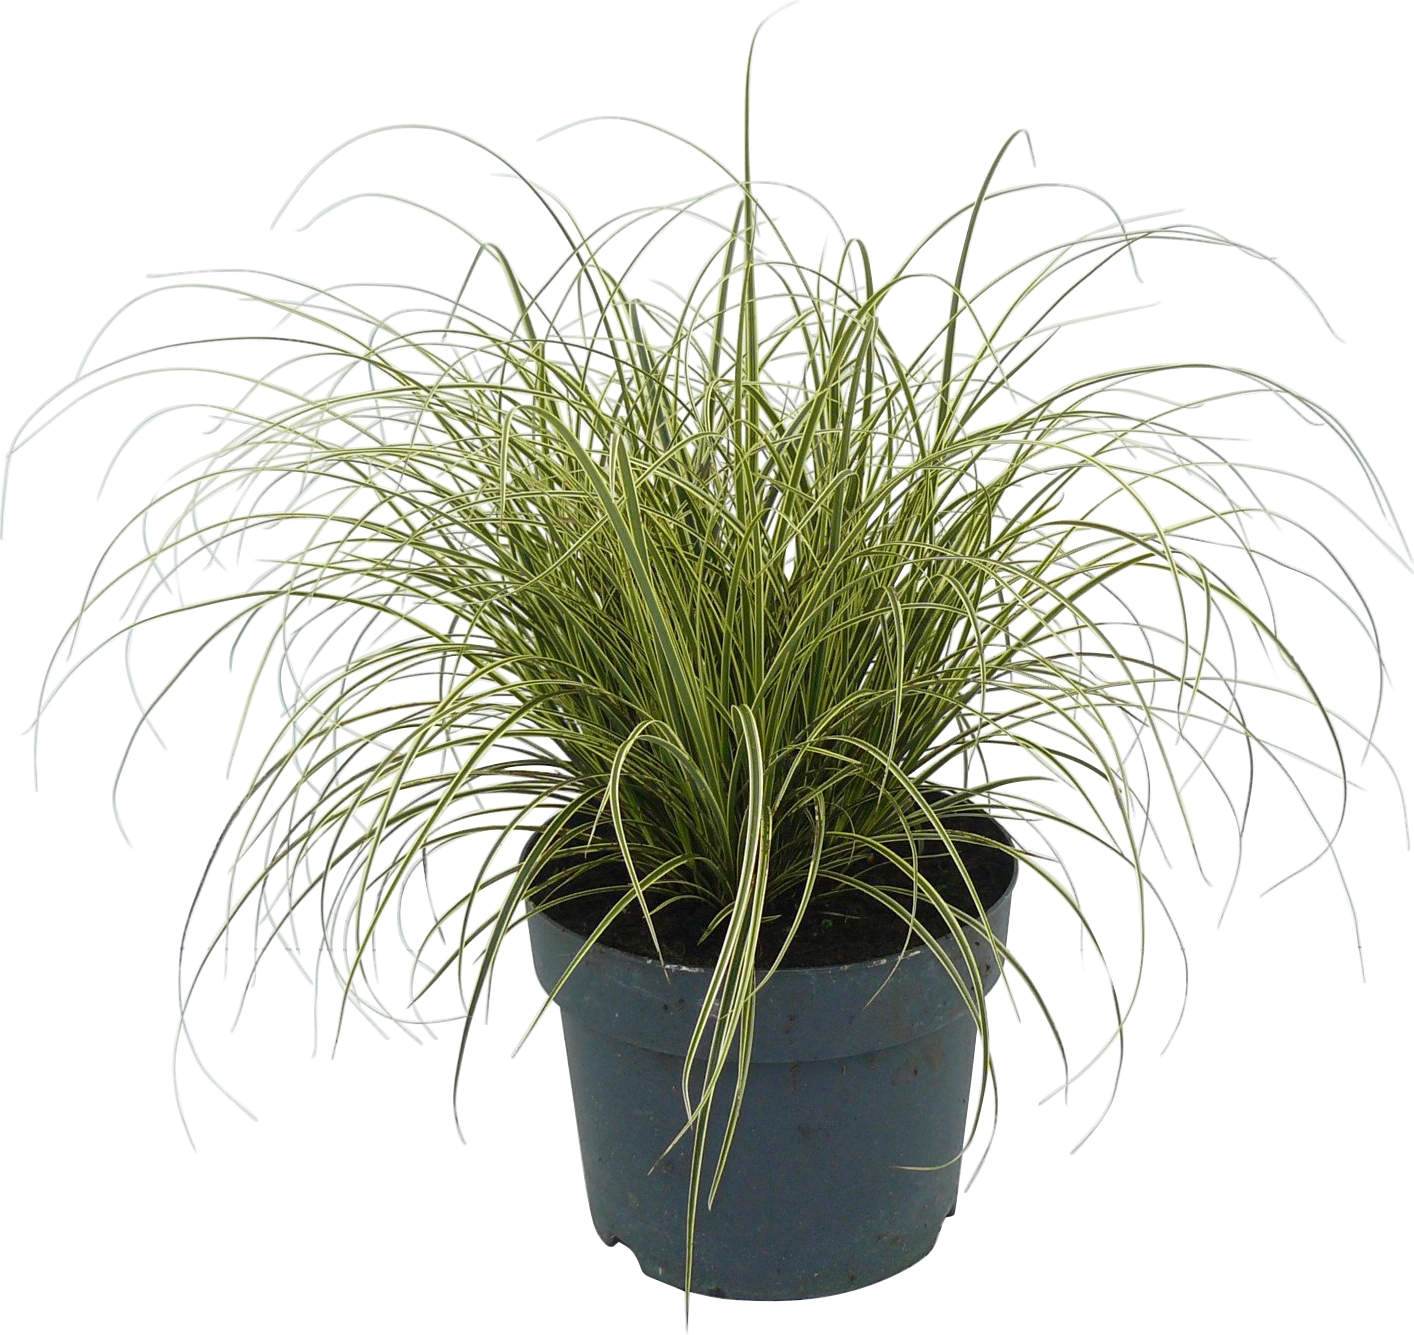 Segge (Carex) online kaufen bei OBI